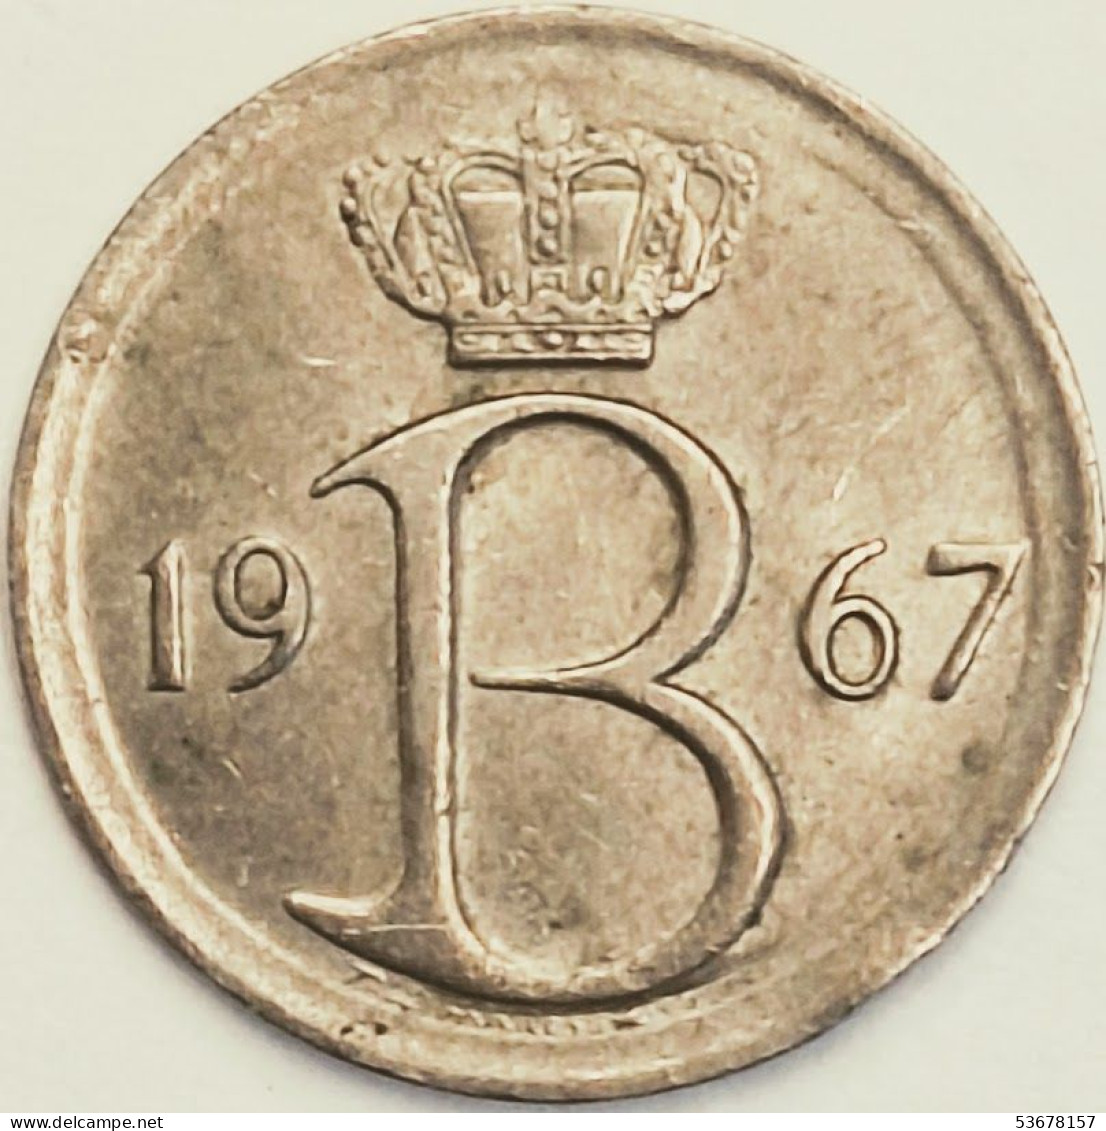 Belgium - 25 Centimes 1967, KM# 154.1 (#3084) - 25 Centimes